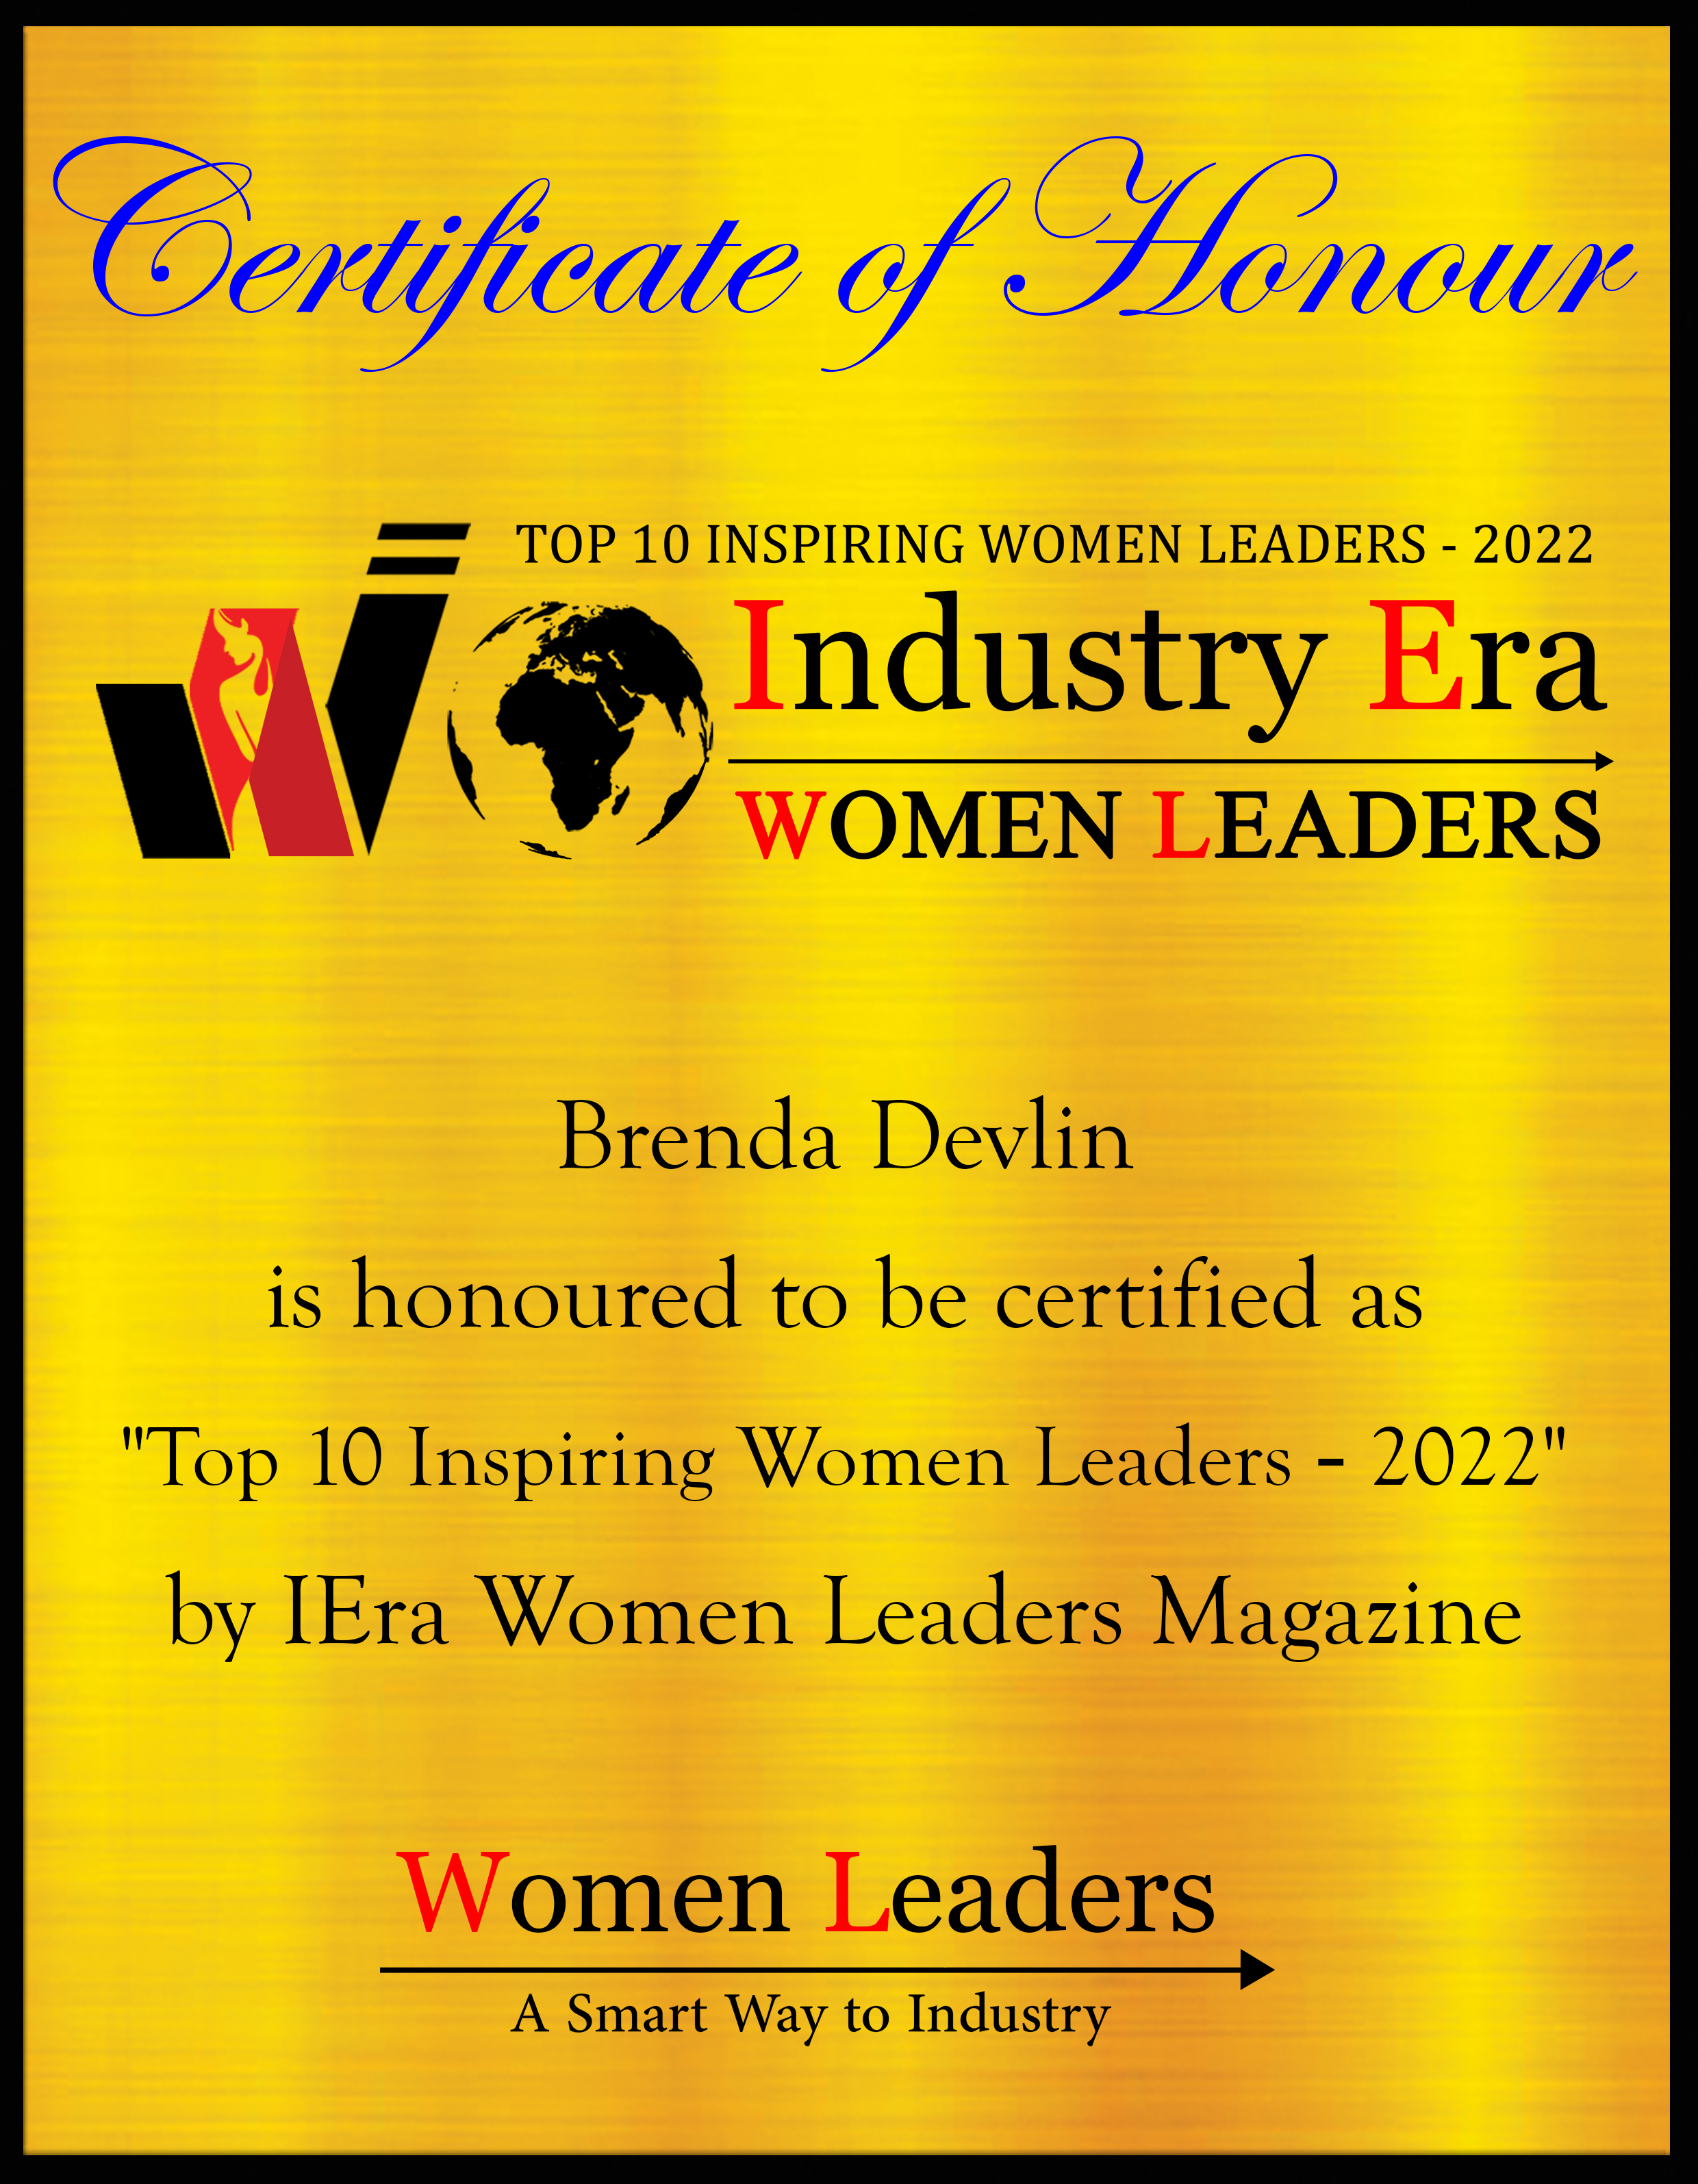 Brenda Devlin, Executive Vice President & Human Capital + Business Support at Harris, Top 10 Inspiring Women Leaders of 2022